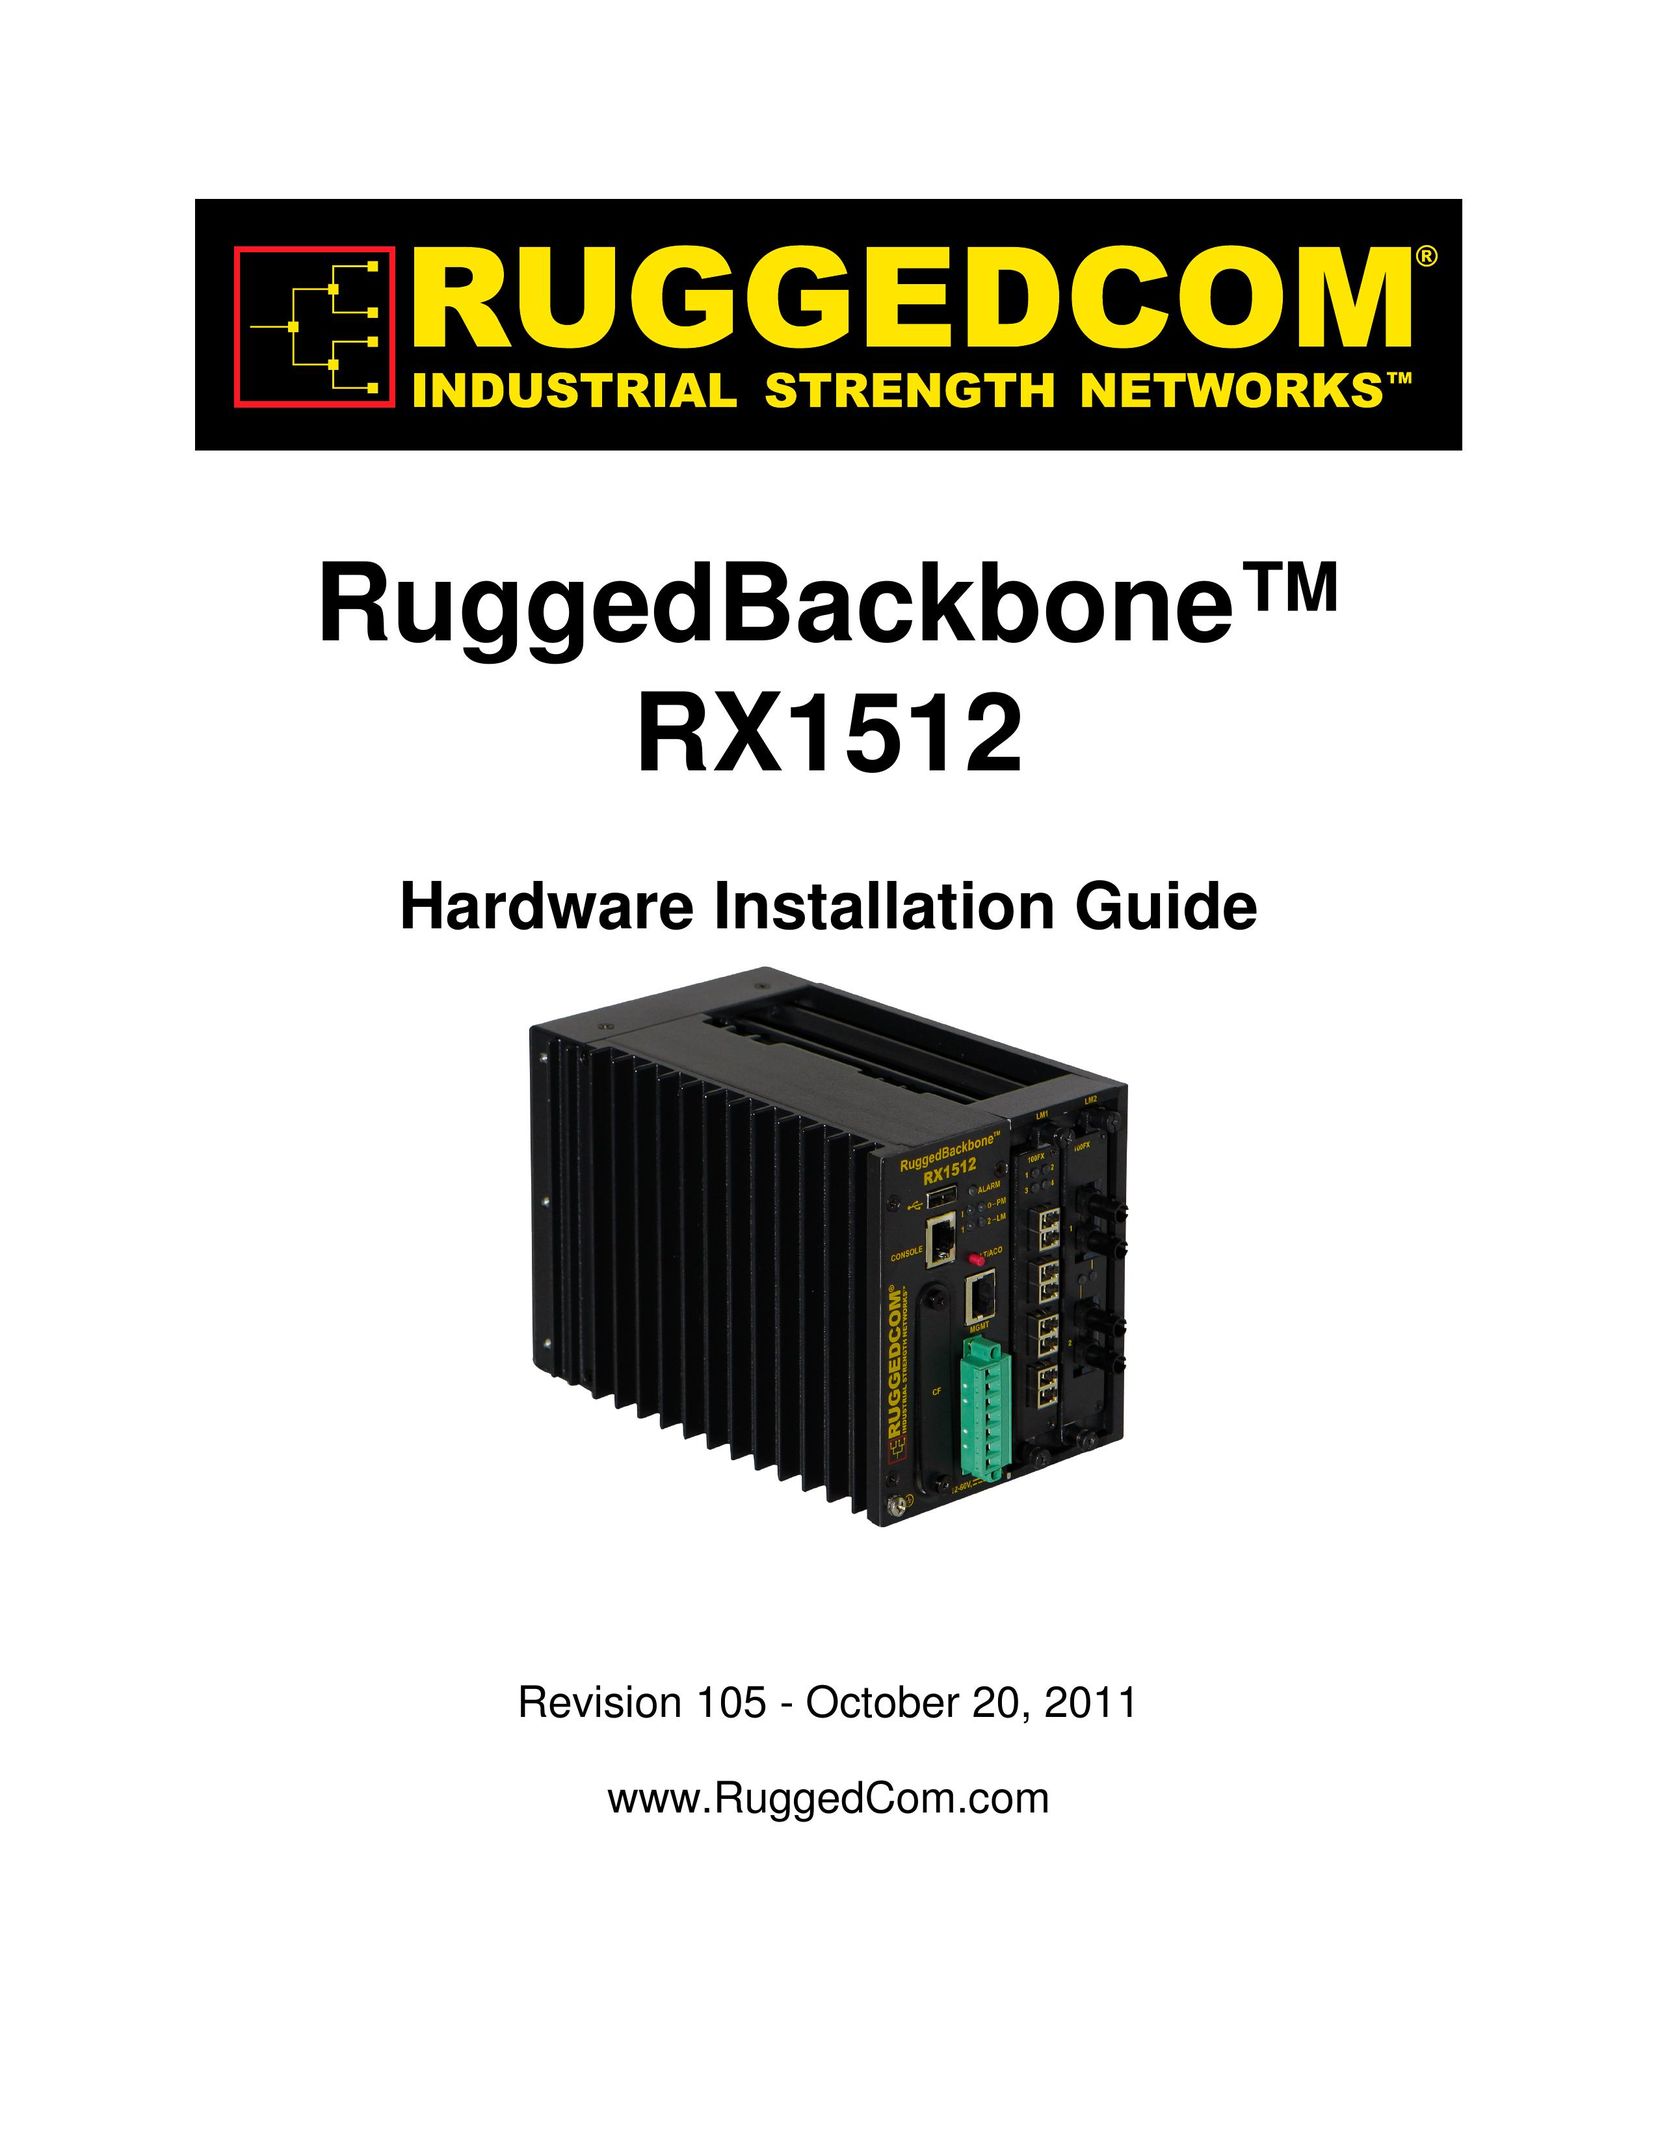 RuggedCom RX1512 Network Hardware User Manual